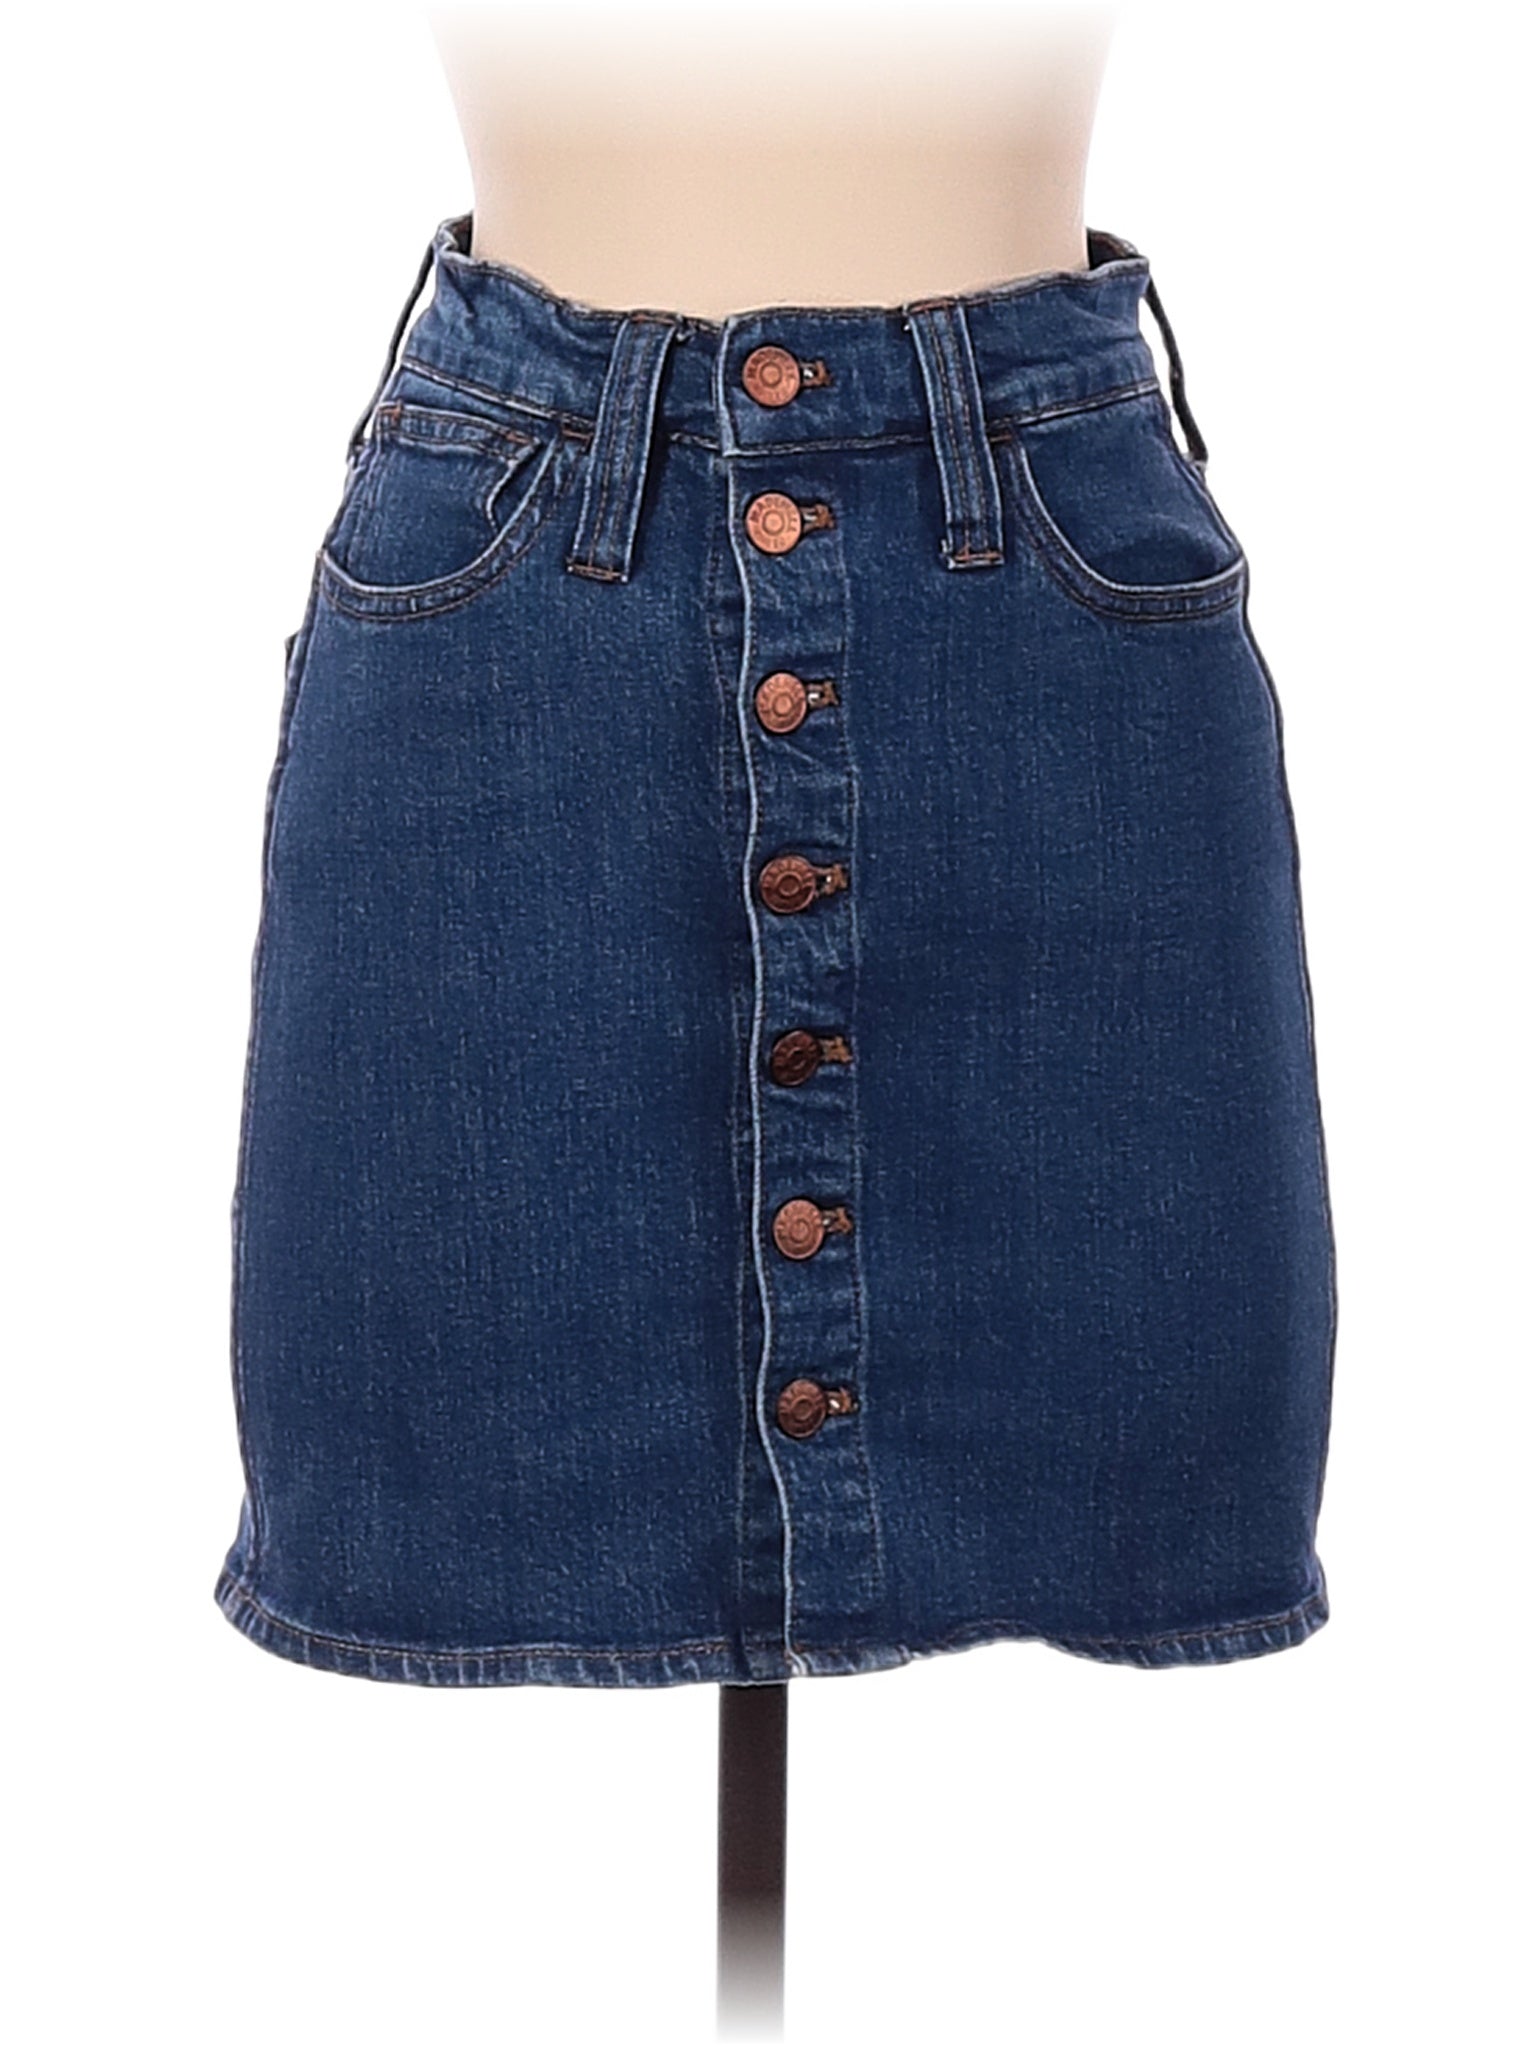 Mid-Rise Madewell Denim Skirt 23 waist size - 23